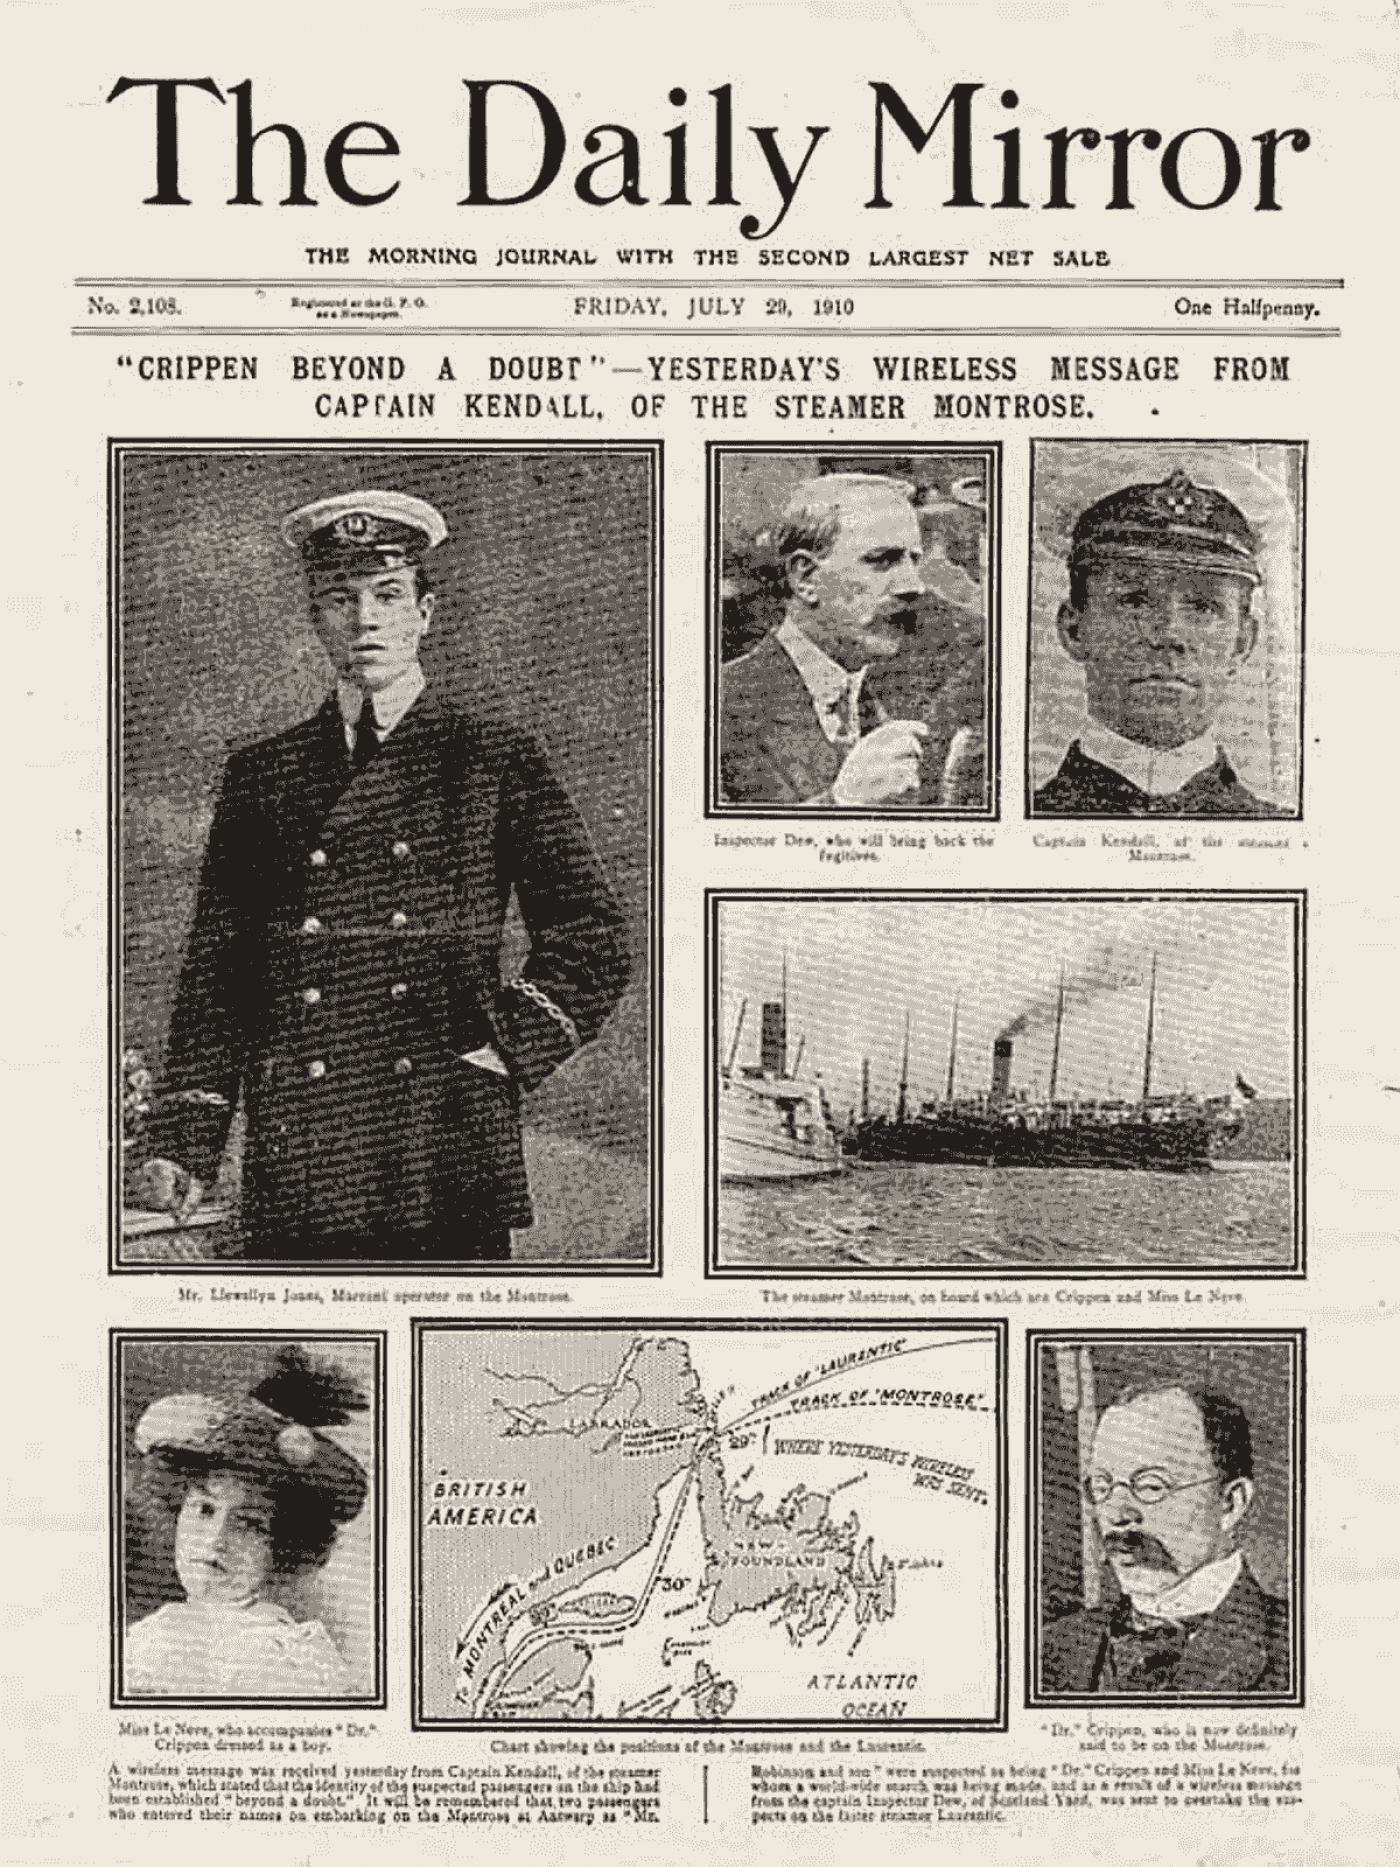 The Daily Mirror, Crippen Arrest 1910